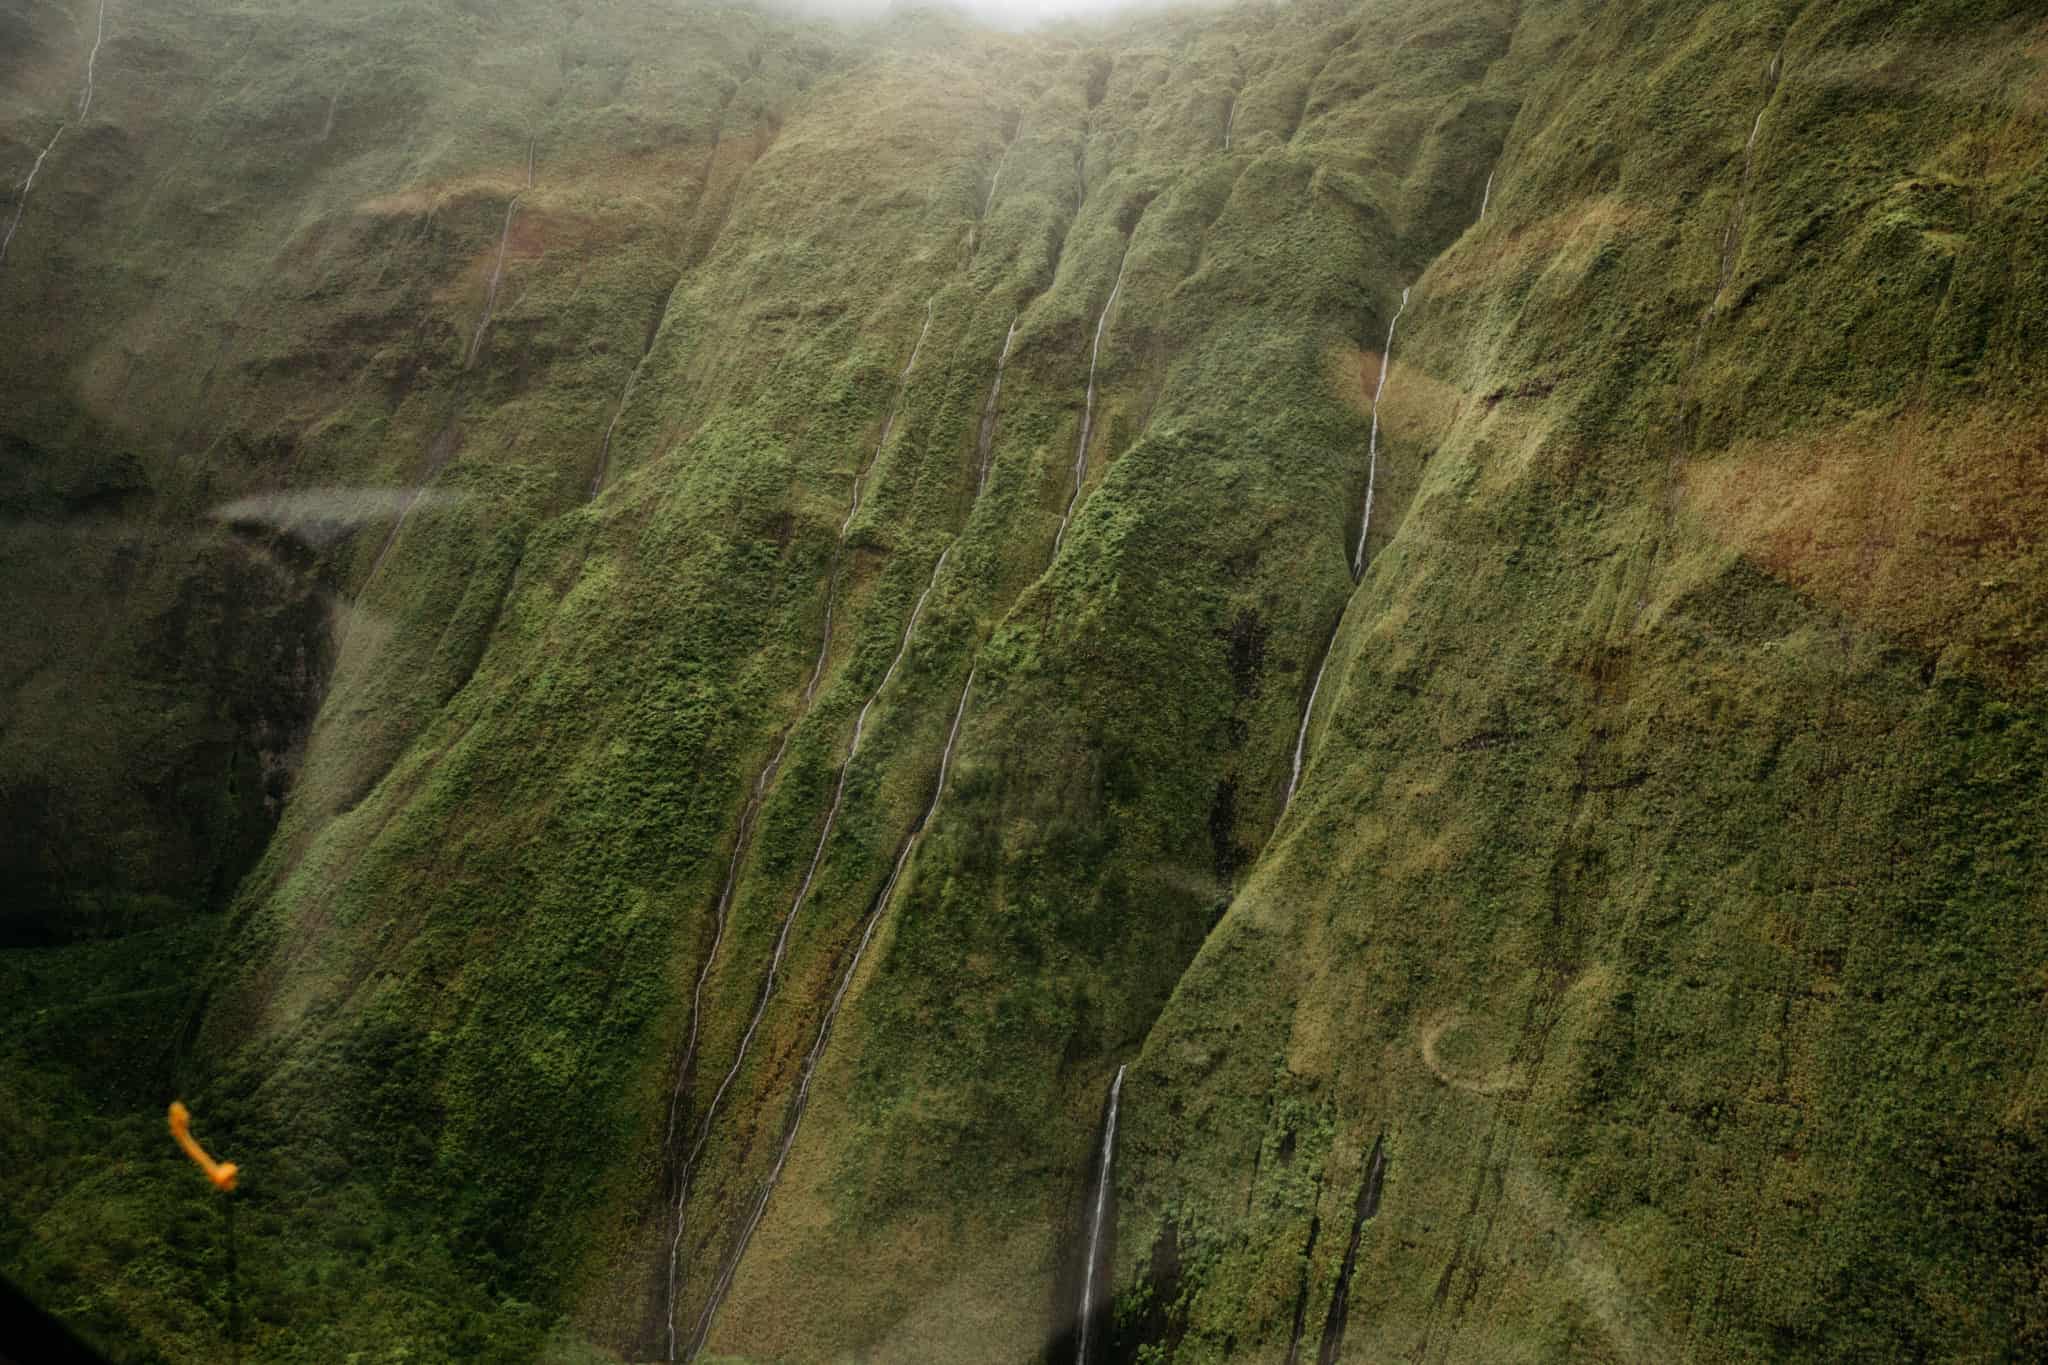 5 Reasons Why You Should Book A Kauai Helicopter Tour -TheMandagies.com